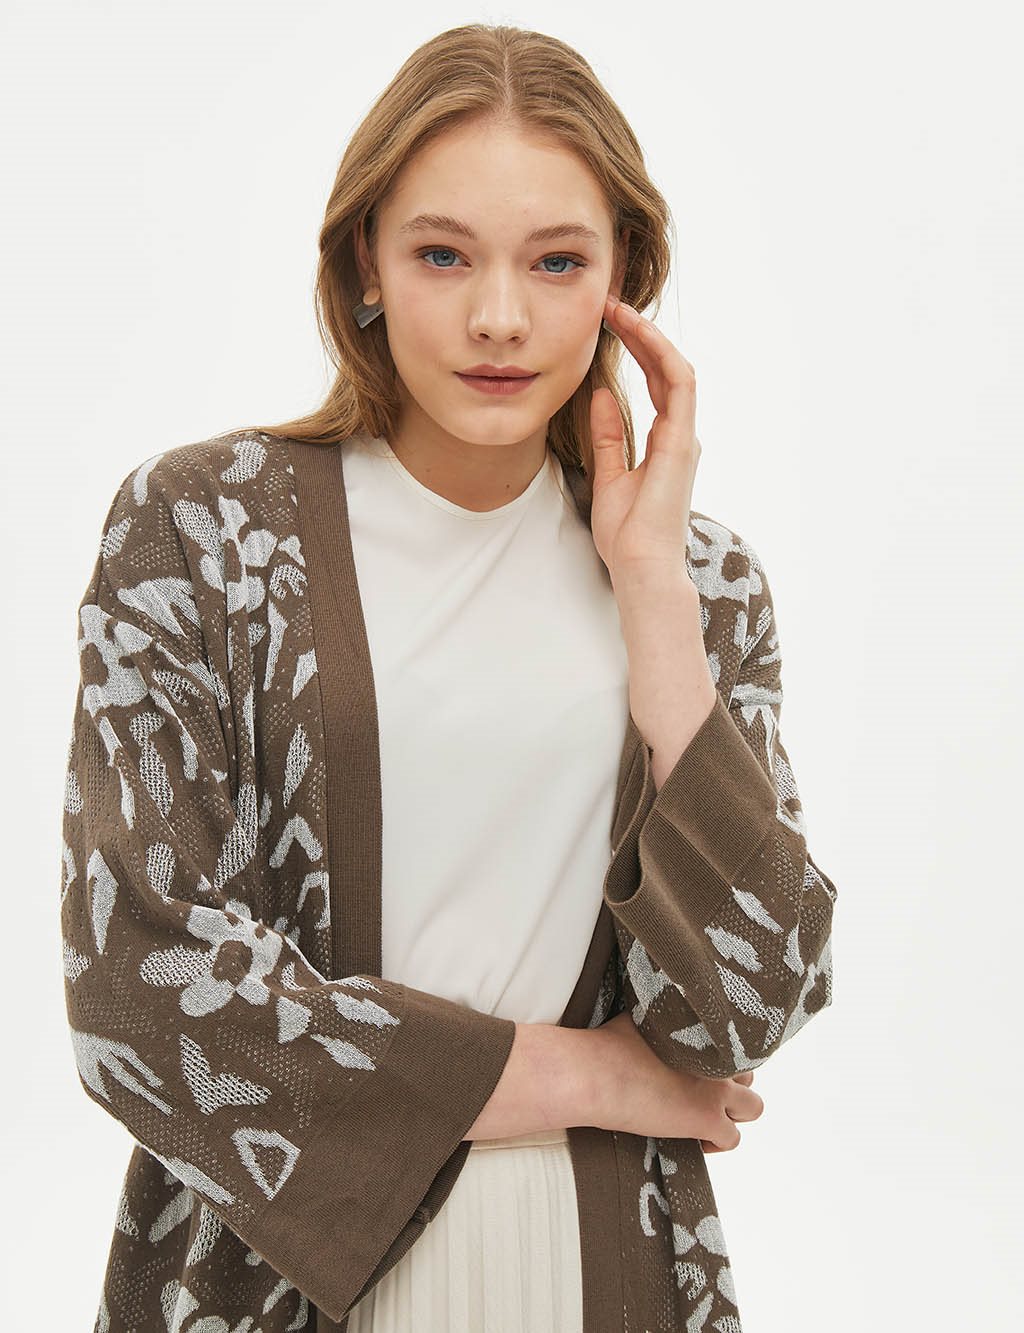 Abstract Patterned Kimono Sleeve Knitwear Cardigan Khaki-White